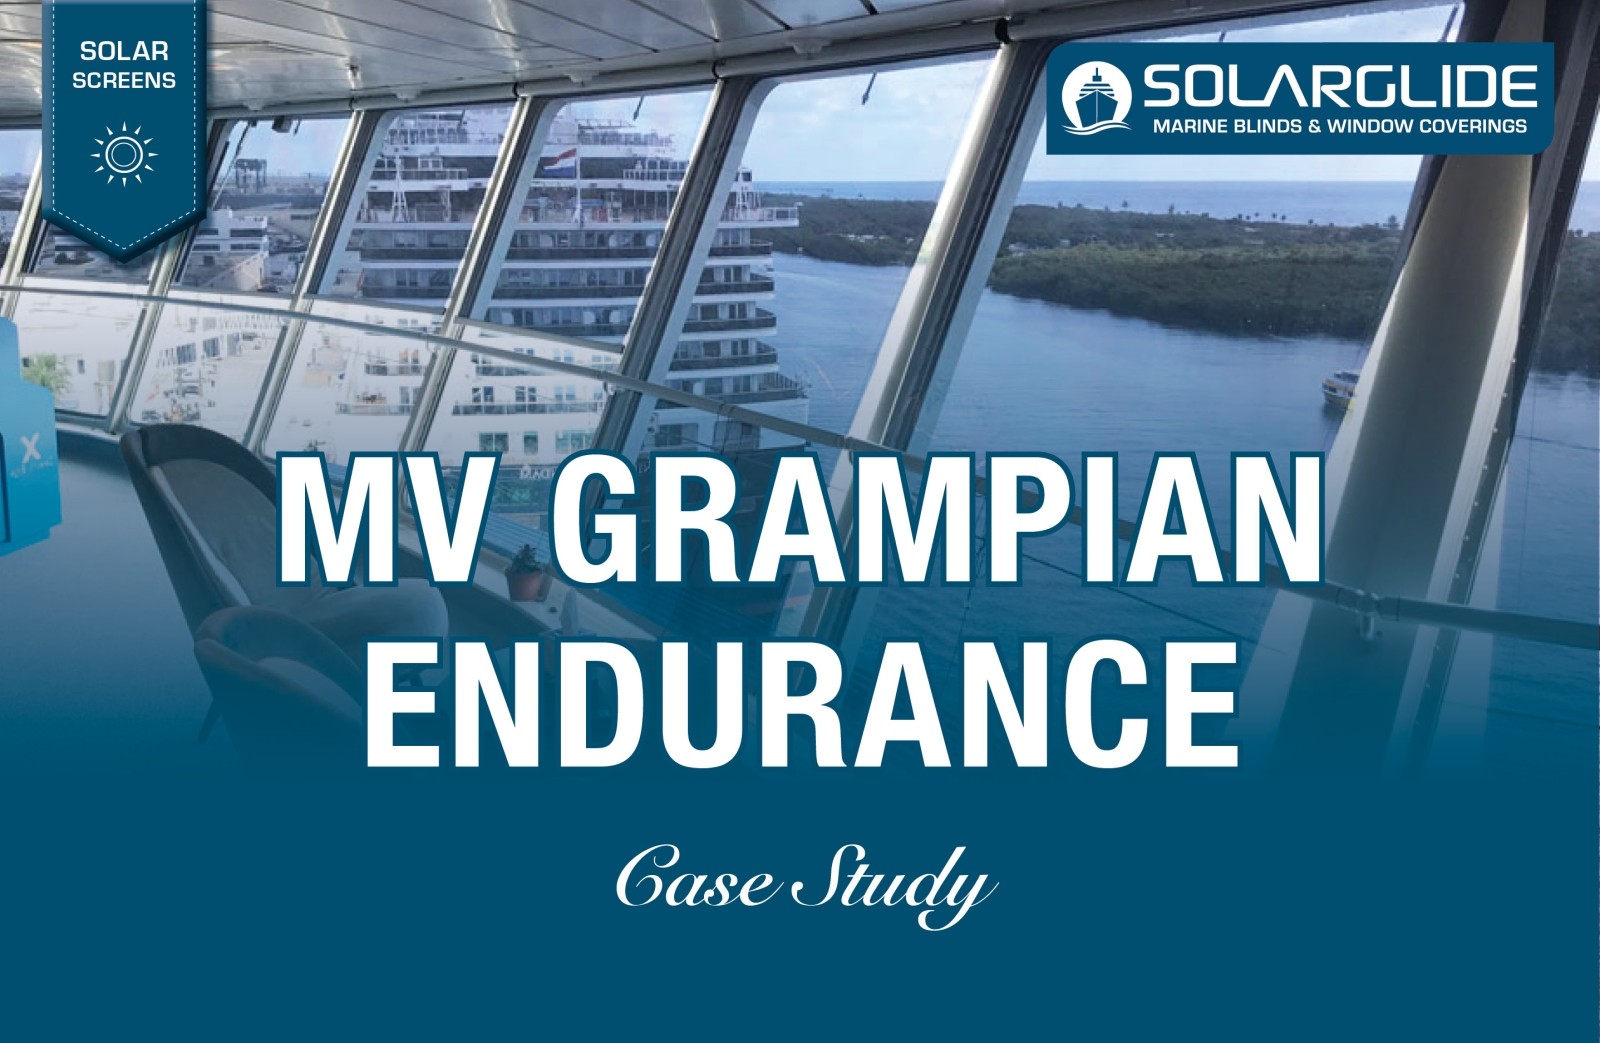 Solarglide The Grampian Endurance case study